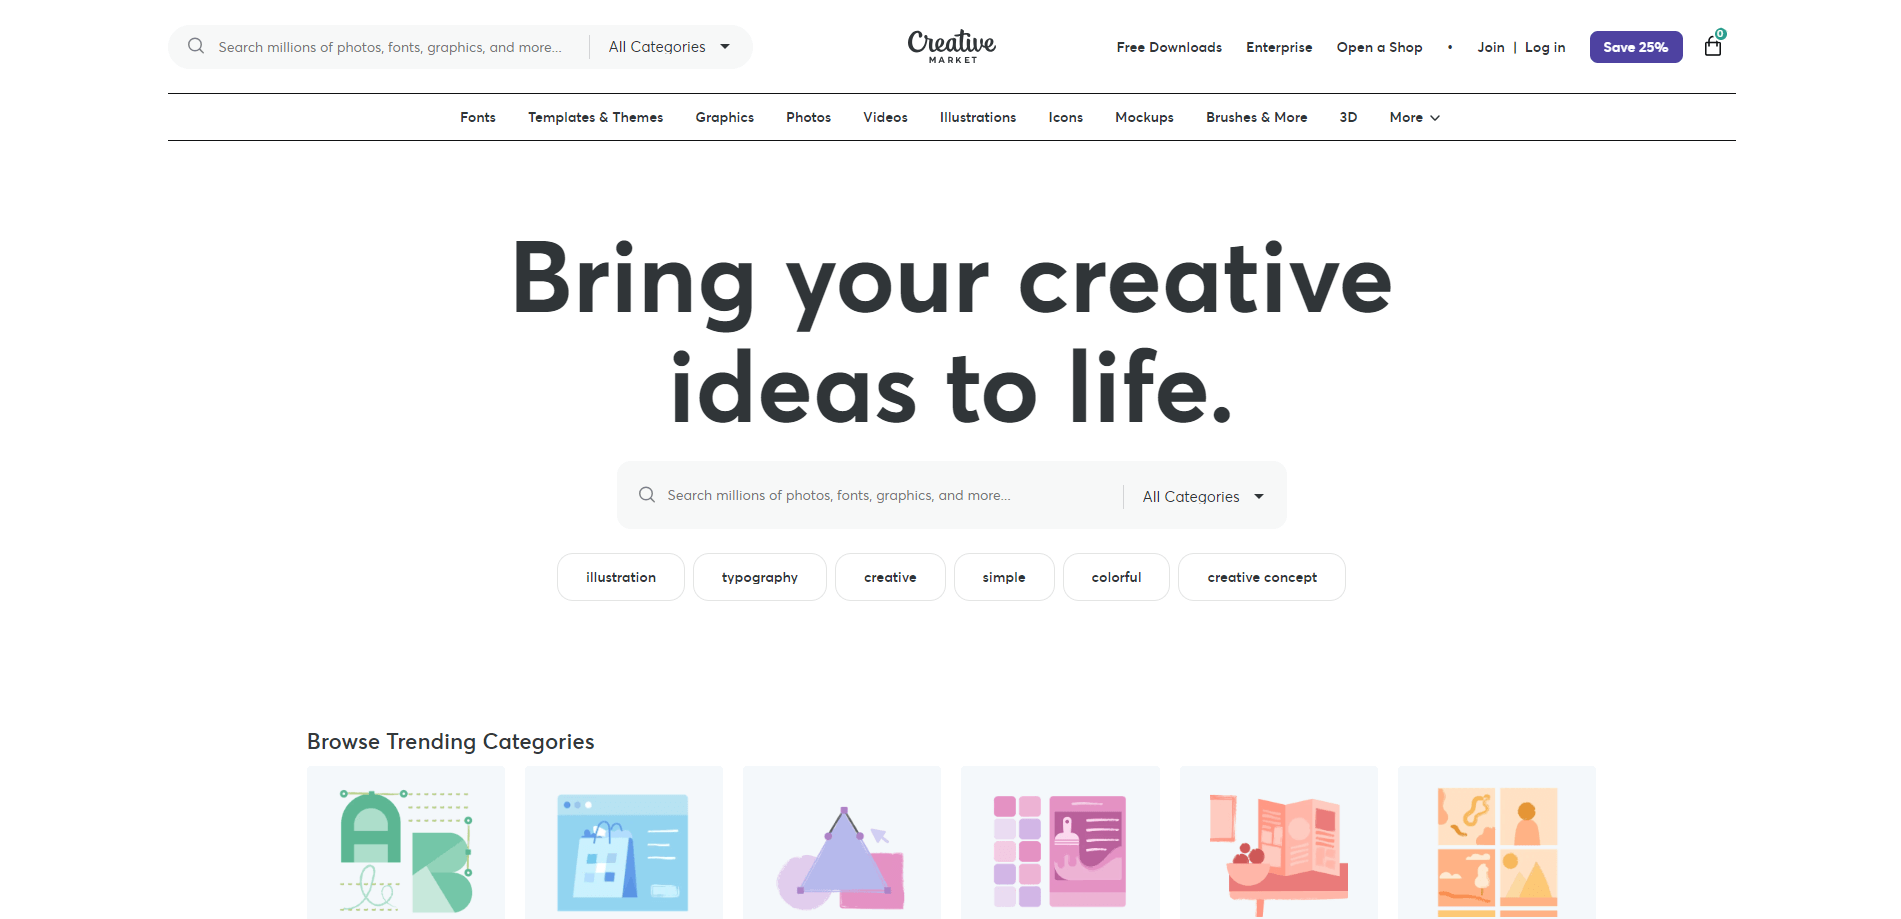 国外设计网站Creative Market 